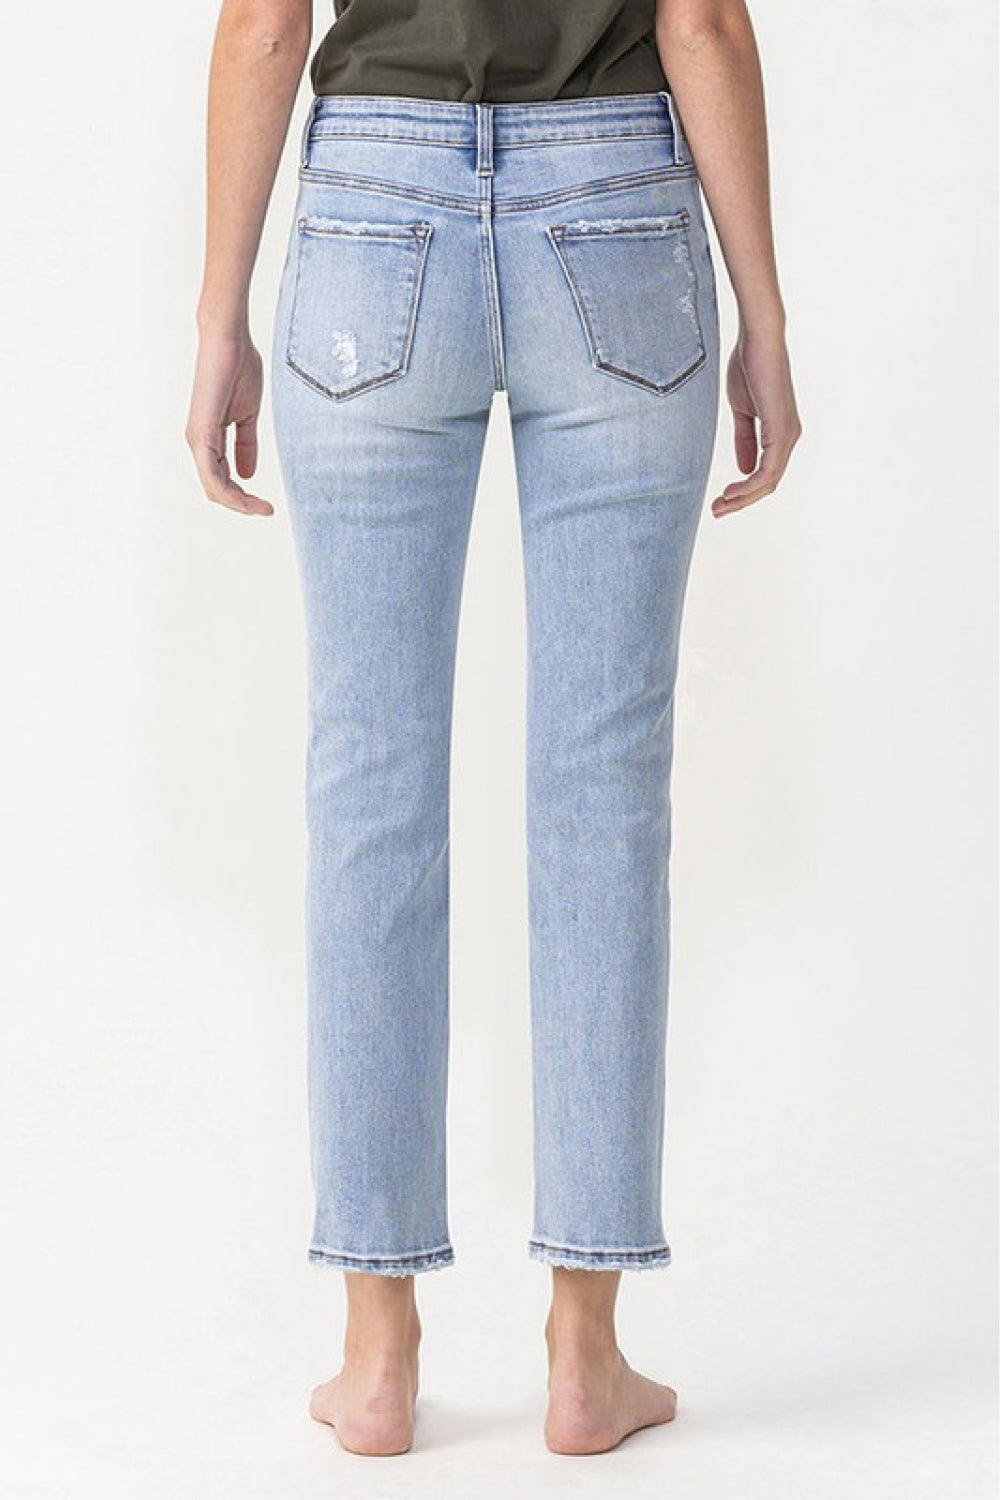 Lavender Lovervet Full Size Andrea Midrise Crop Straight Jeans Pants